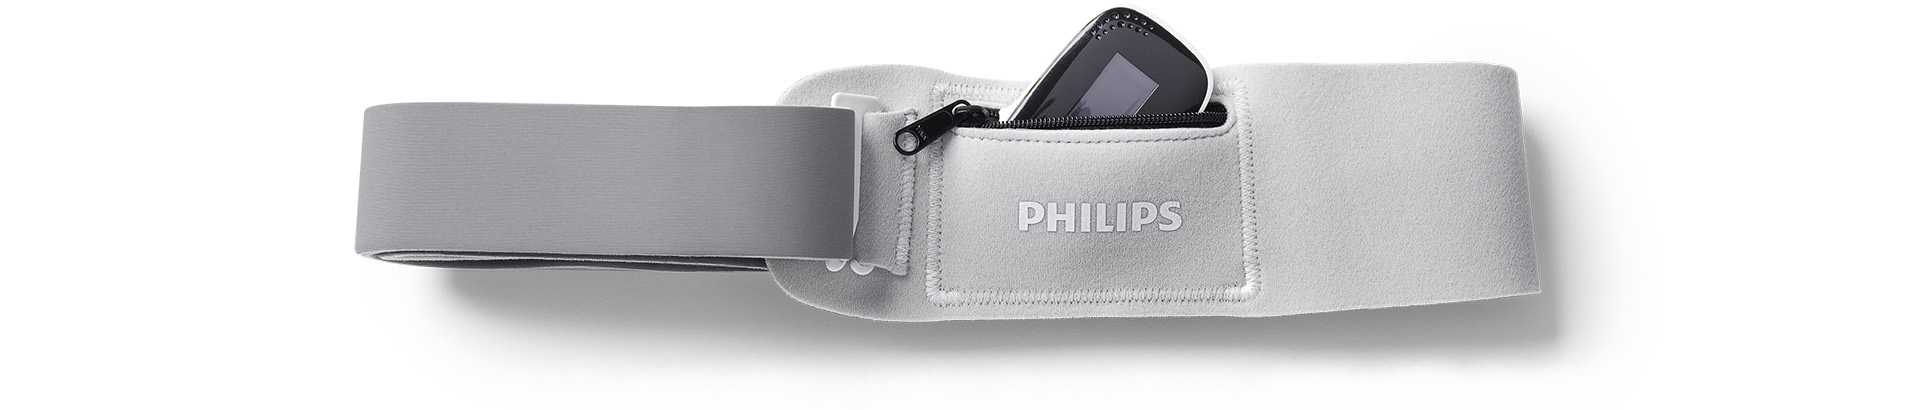 NightBalance 2.0 chest strap with sensor device inside open pocket